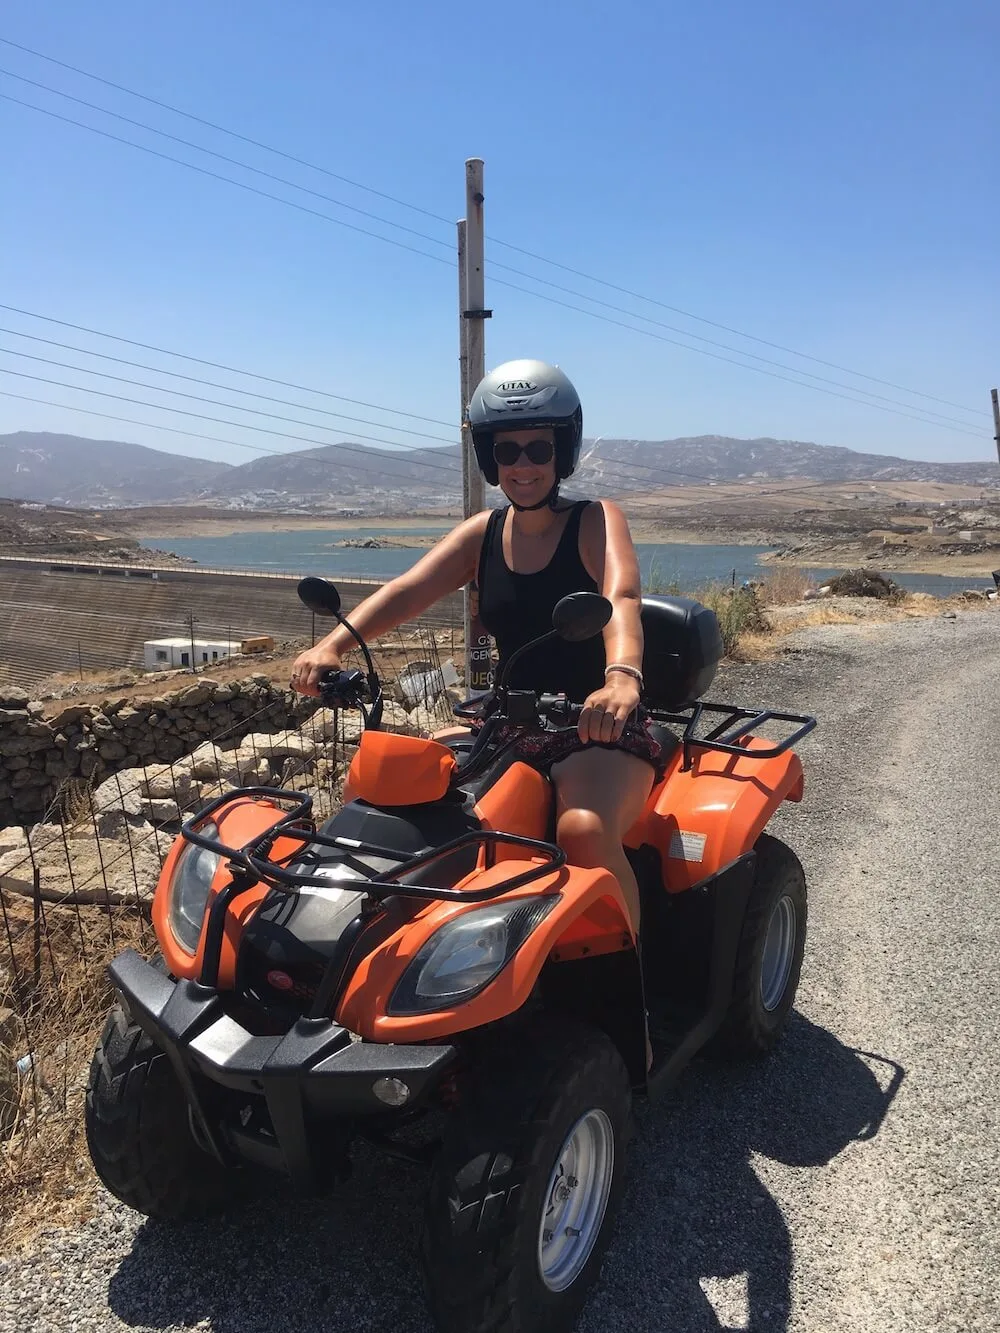 Me on the quad bike in Mykonos